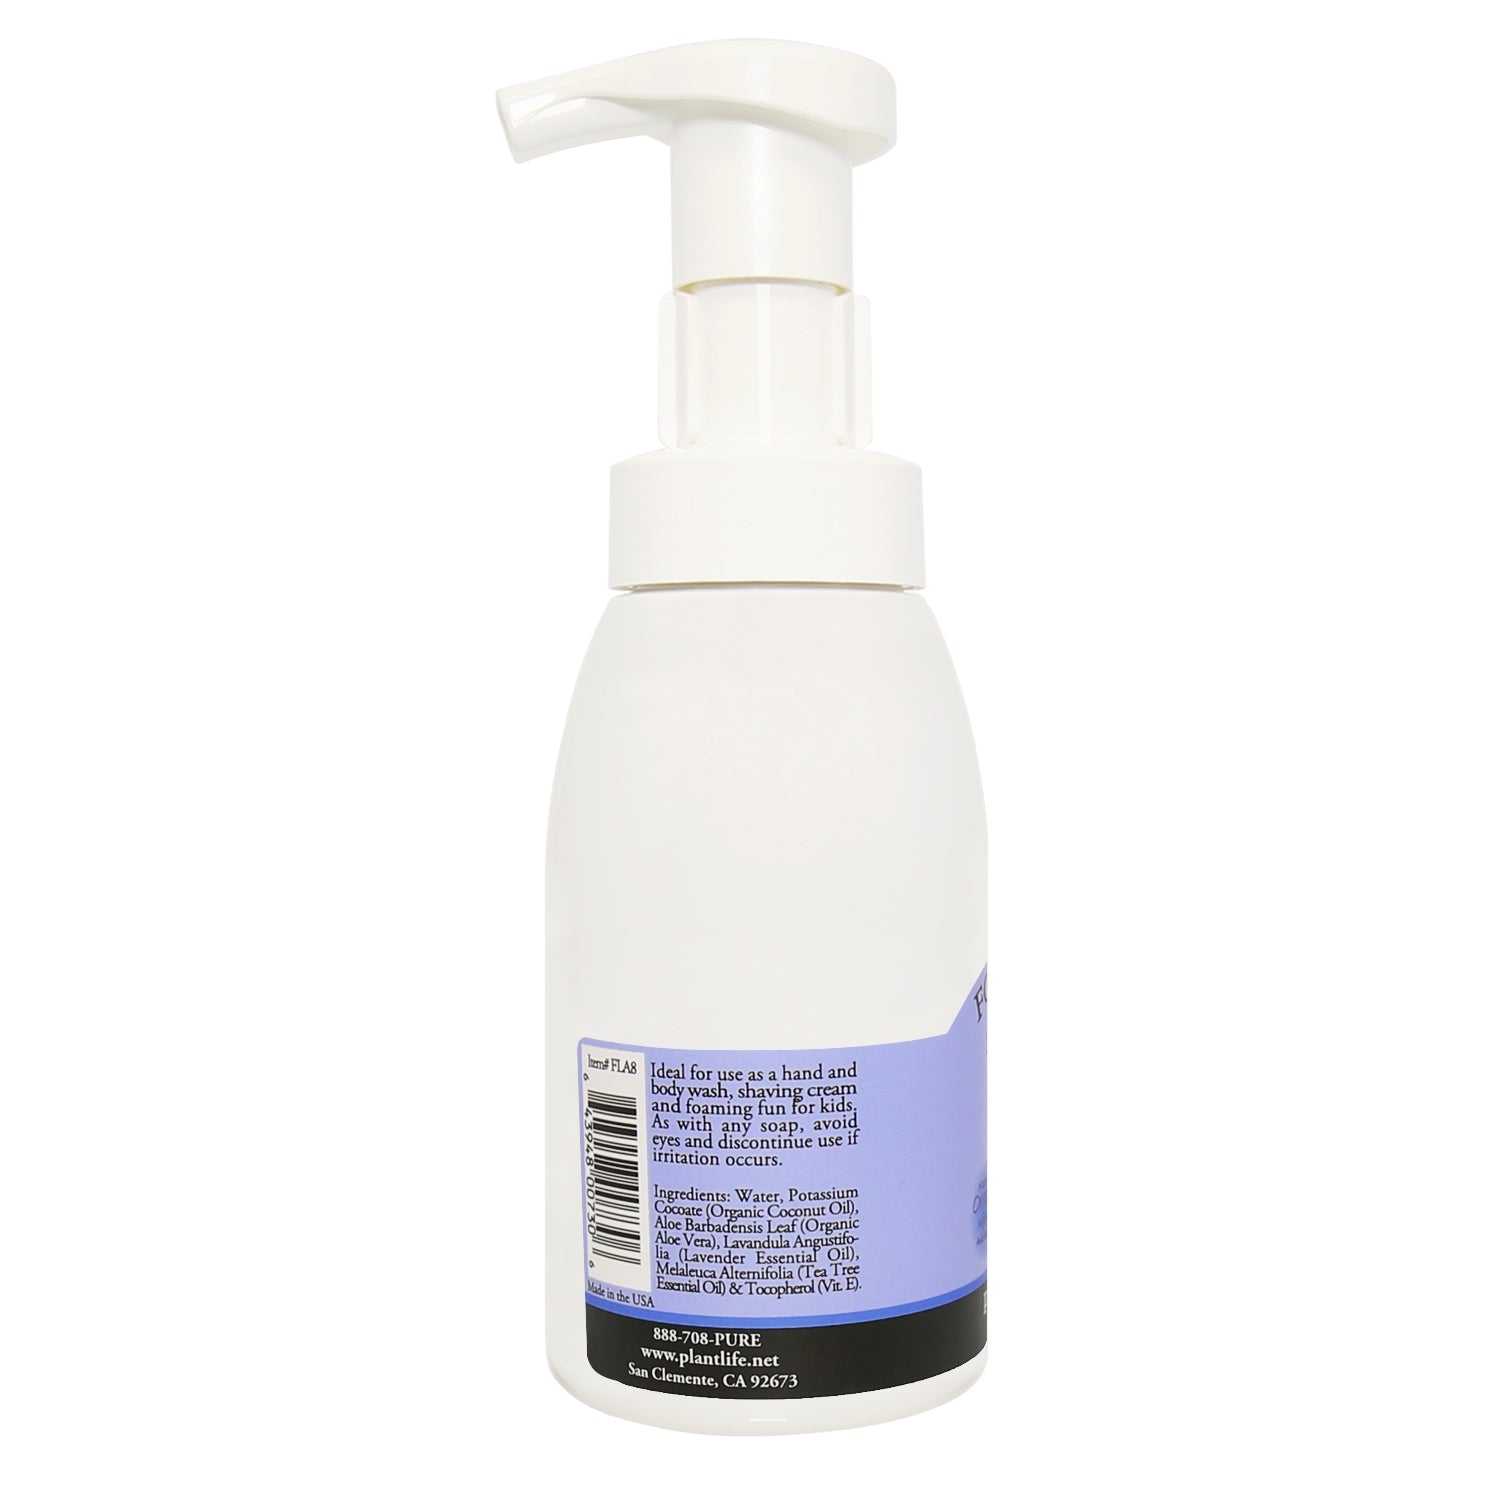 Plantlife Foam Soap Hand & Body Lavender Pump - 8.5 fl oz